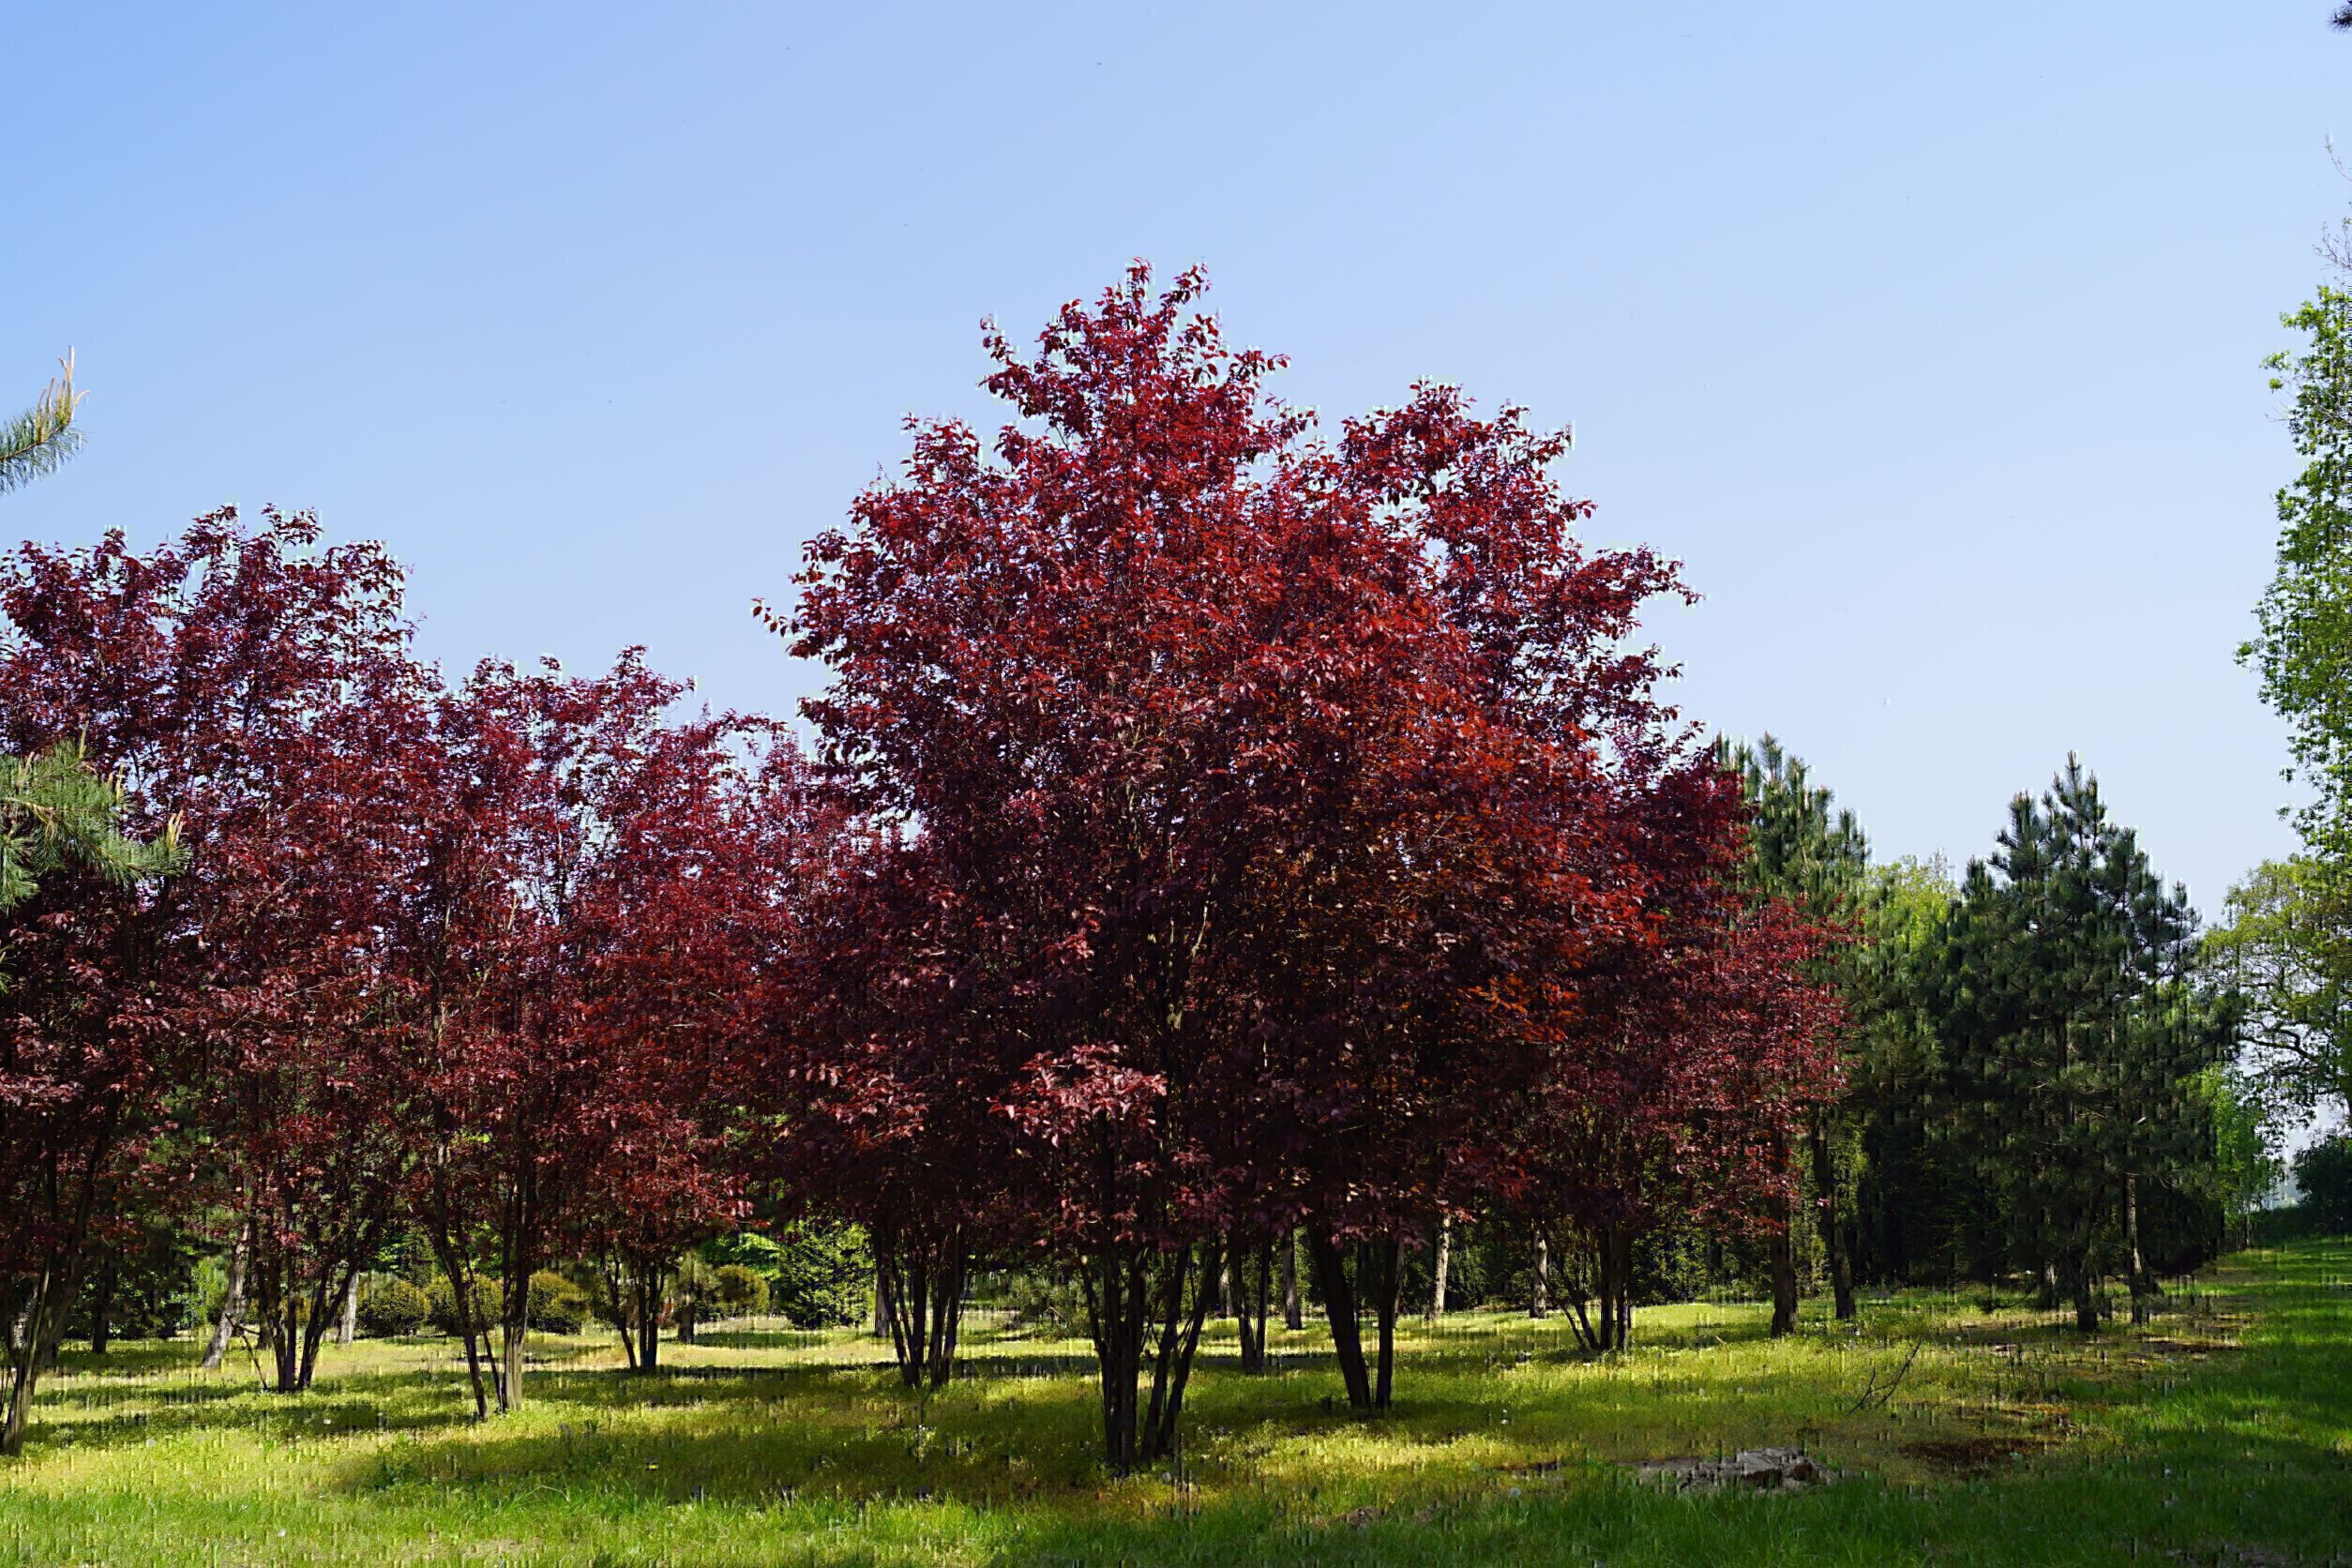 15. Prunus cerasifera 'Nigra'